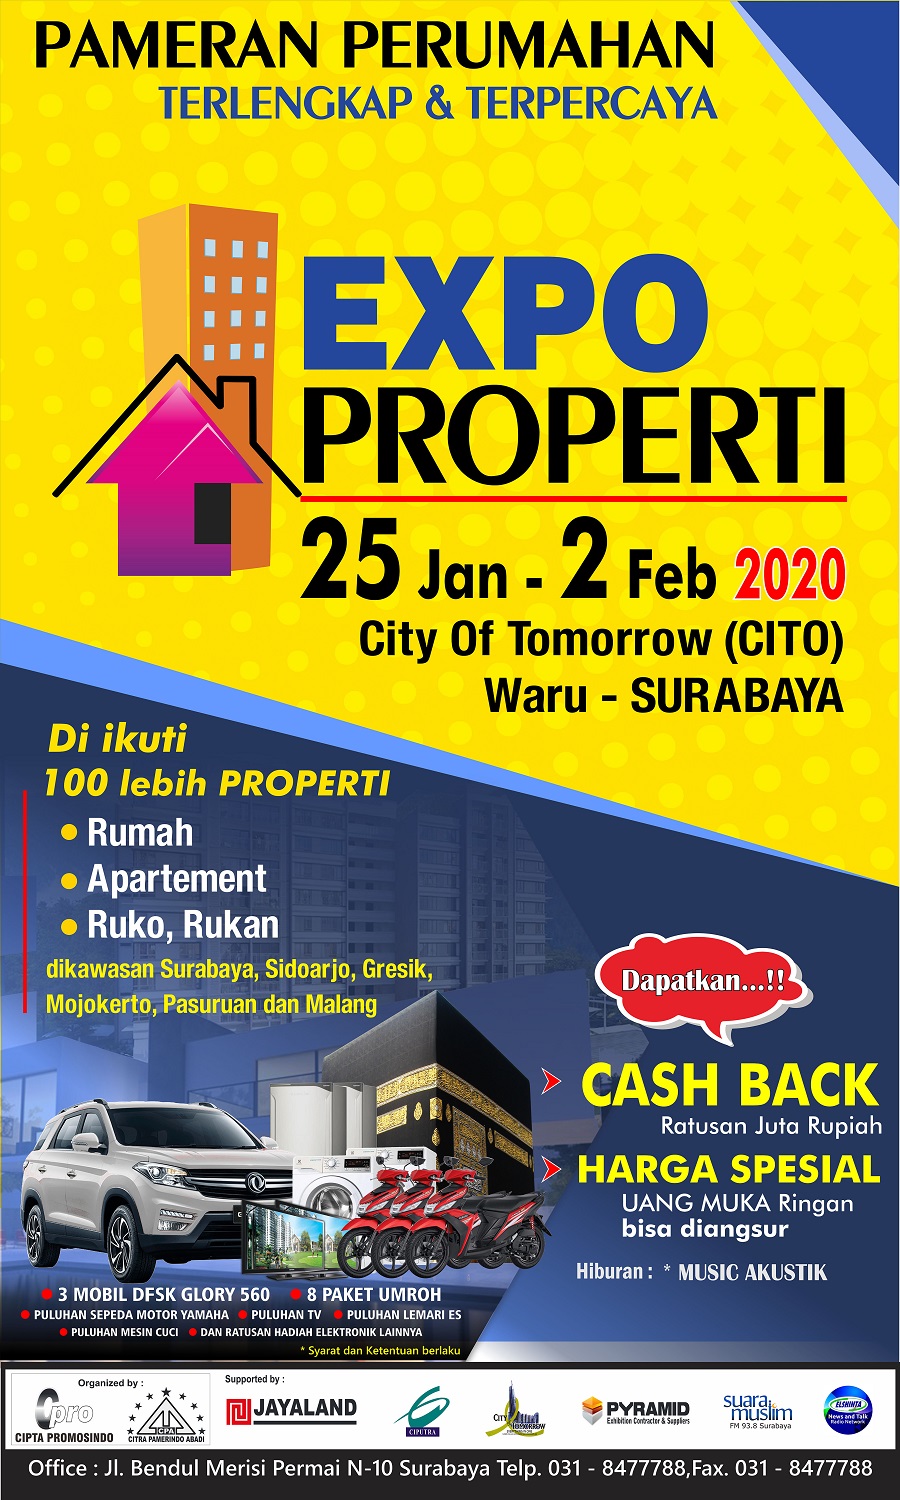 Expo Property 2020